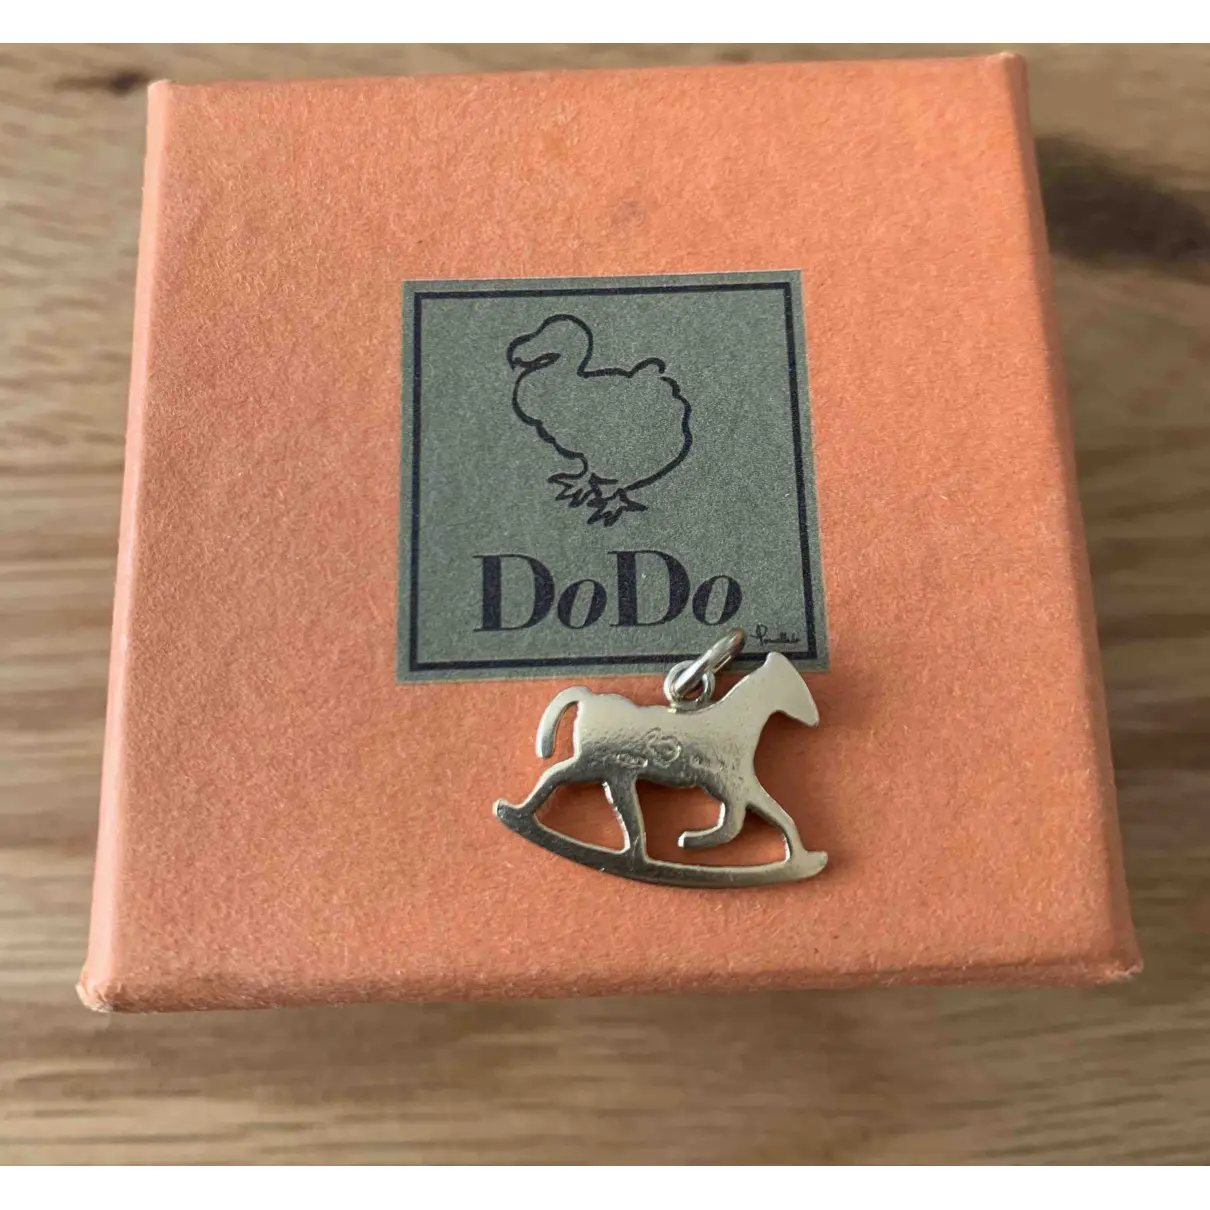 Buy Dodo Yellow gold pendant online